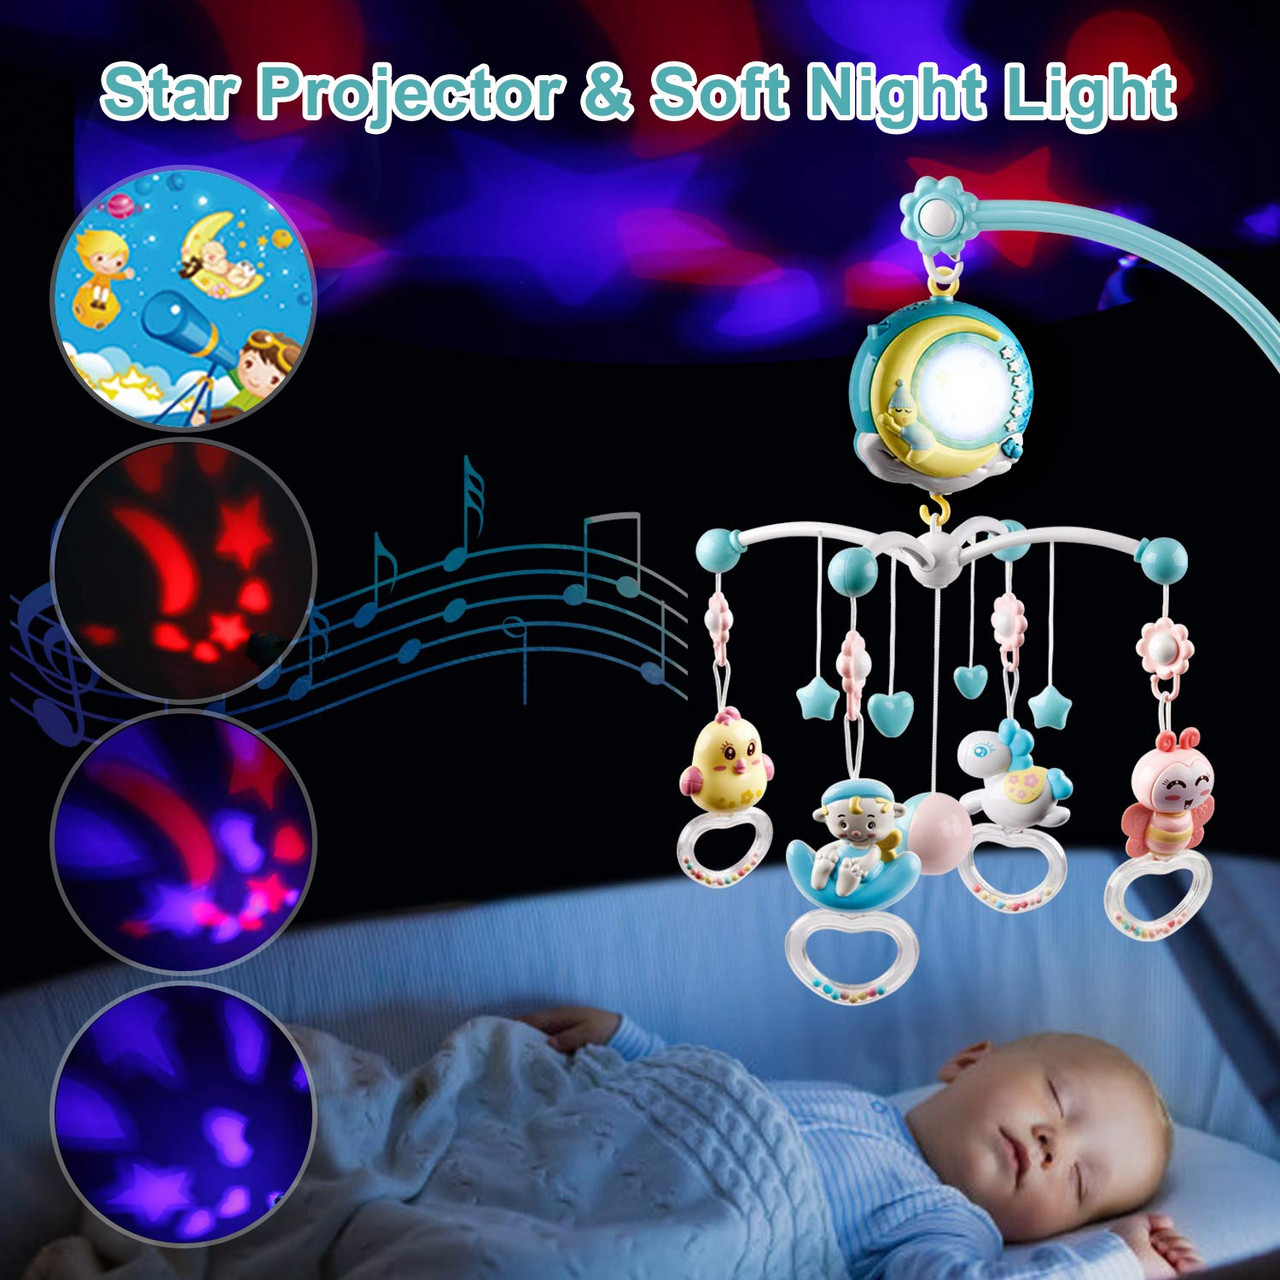 BabyLuv® Rotating Mobile Nursery Light product image